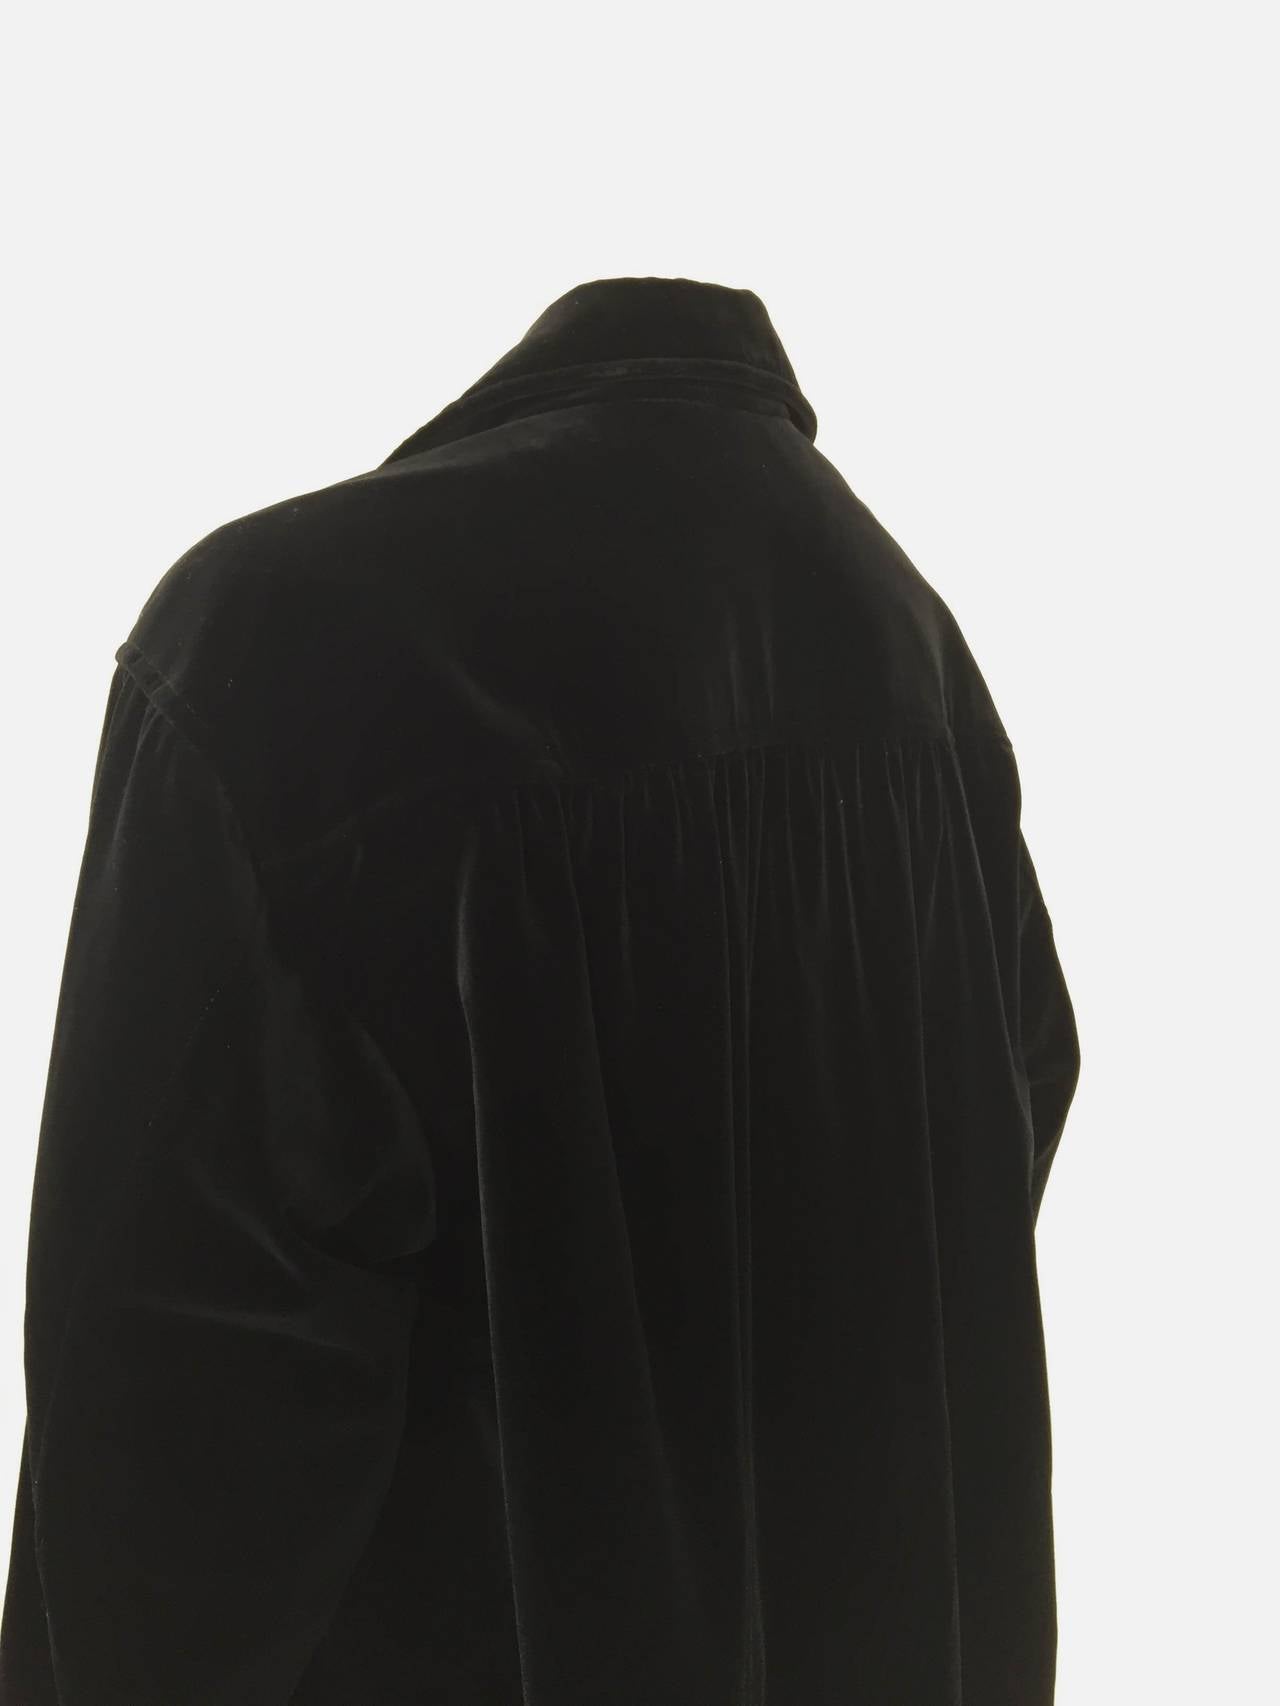 Saint Laurent Rive Gauche 70s black velvet coat. 3